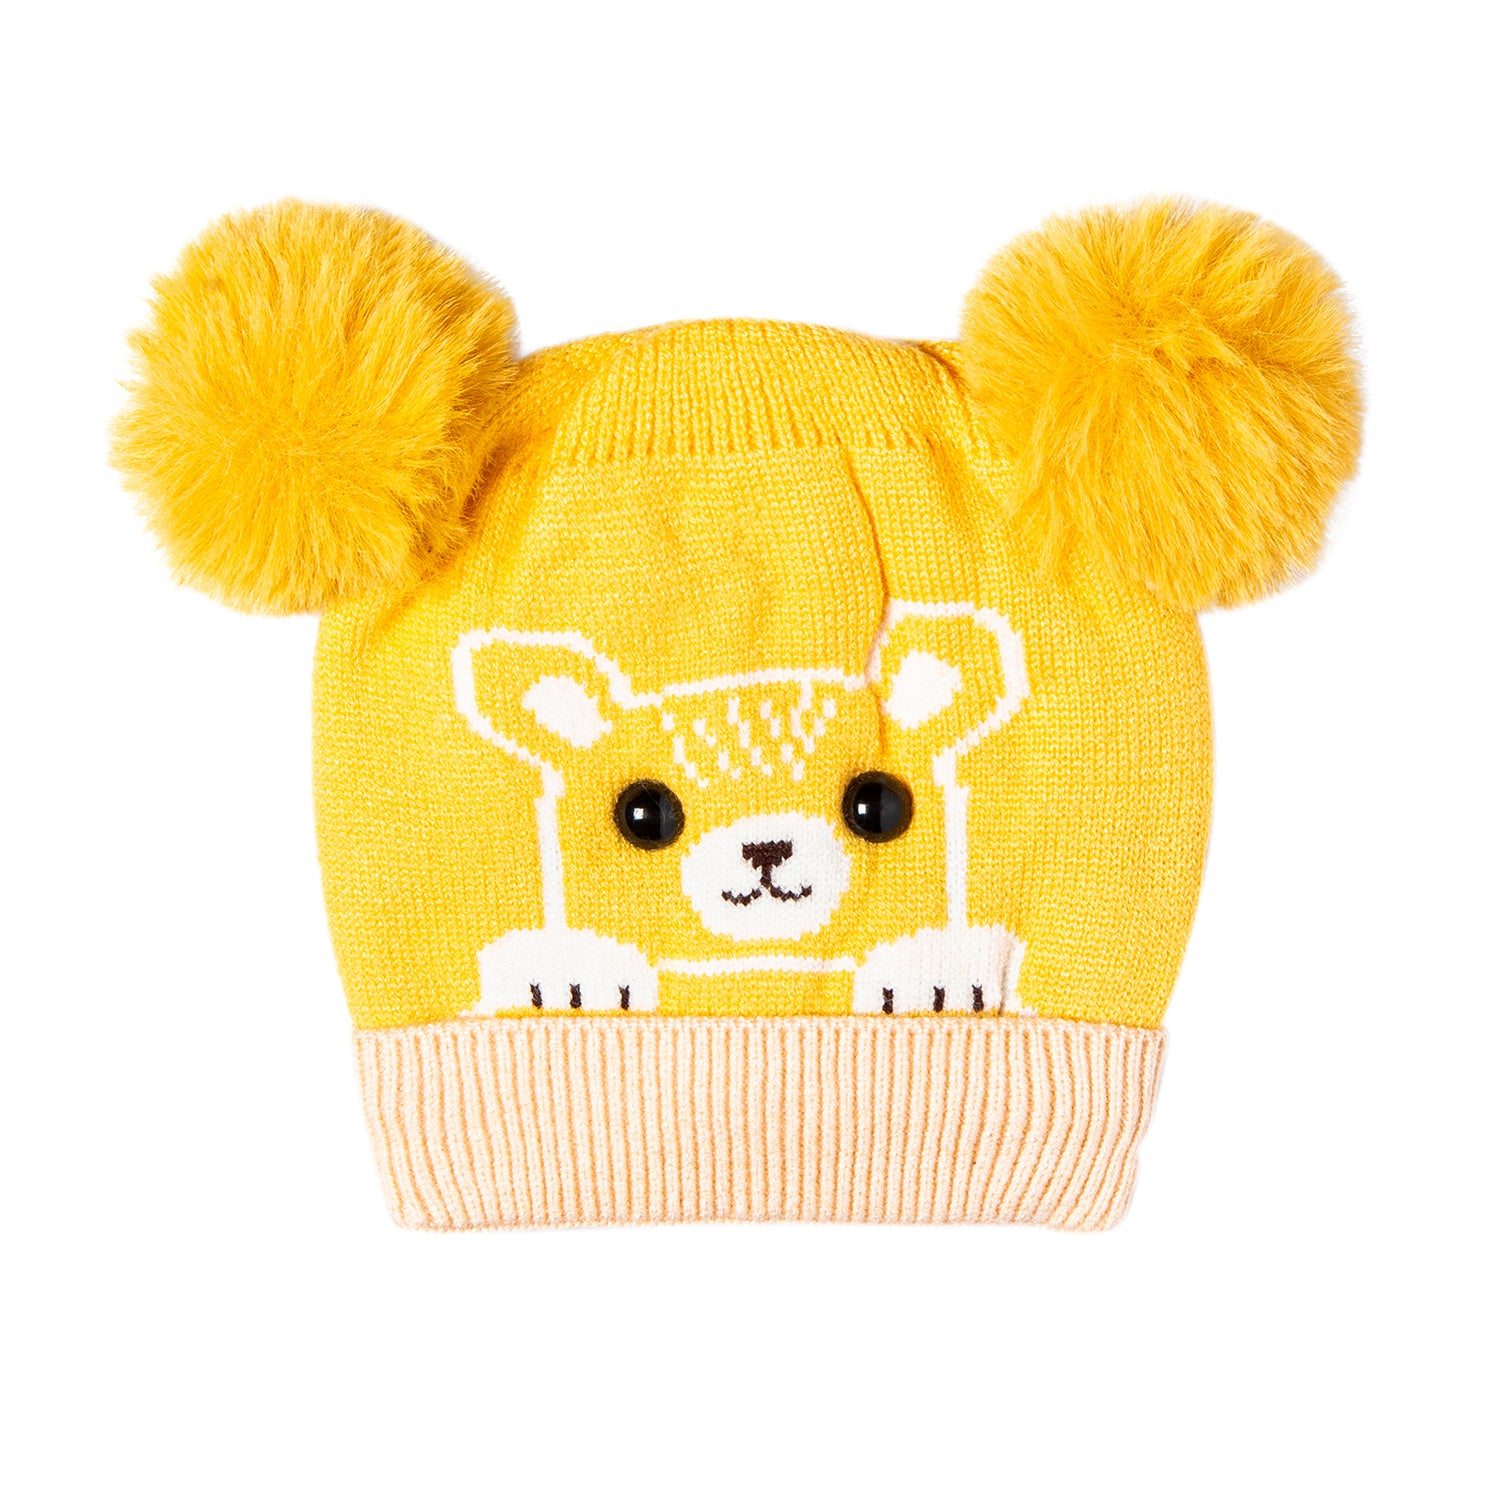 Knit Woollen Cap Pom Pom Bear Yellow - Baby Moo